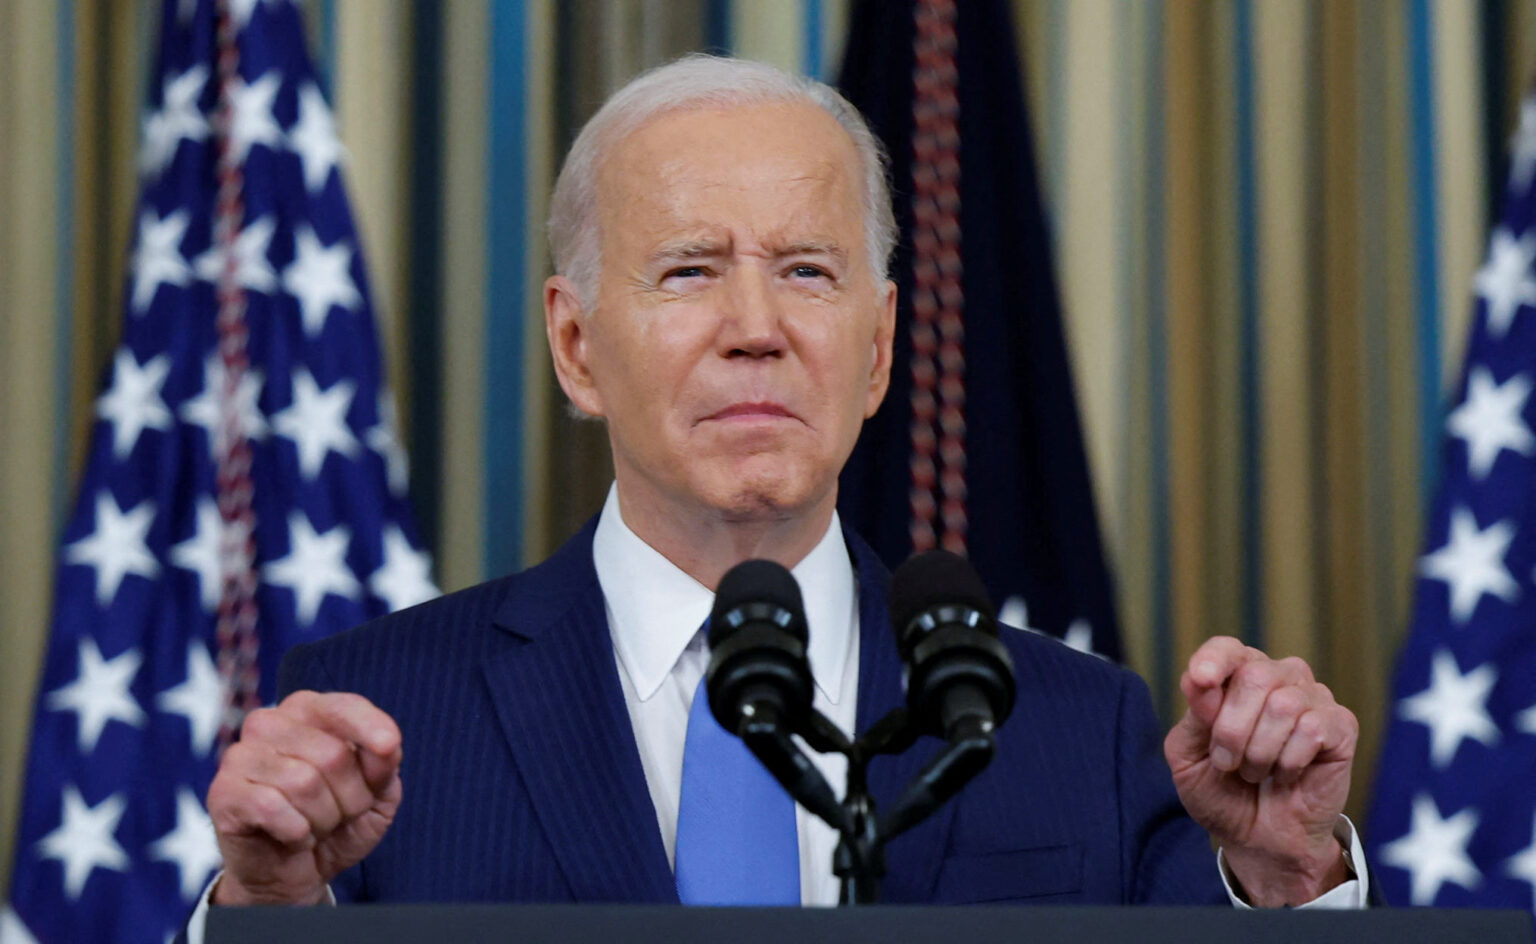 ‘Good day for democracy’ - Joe Biden